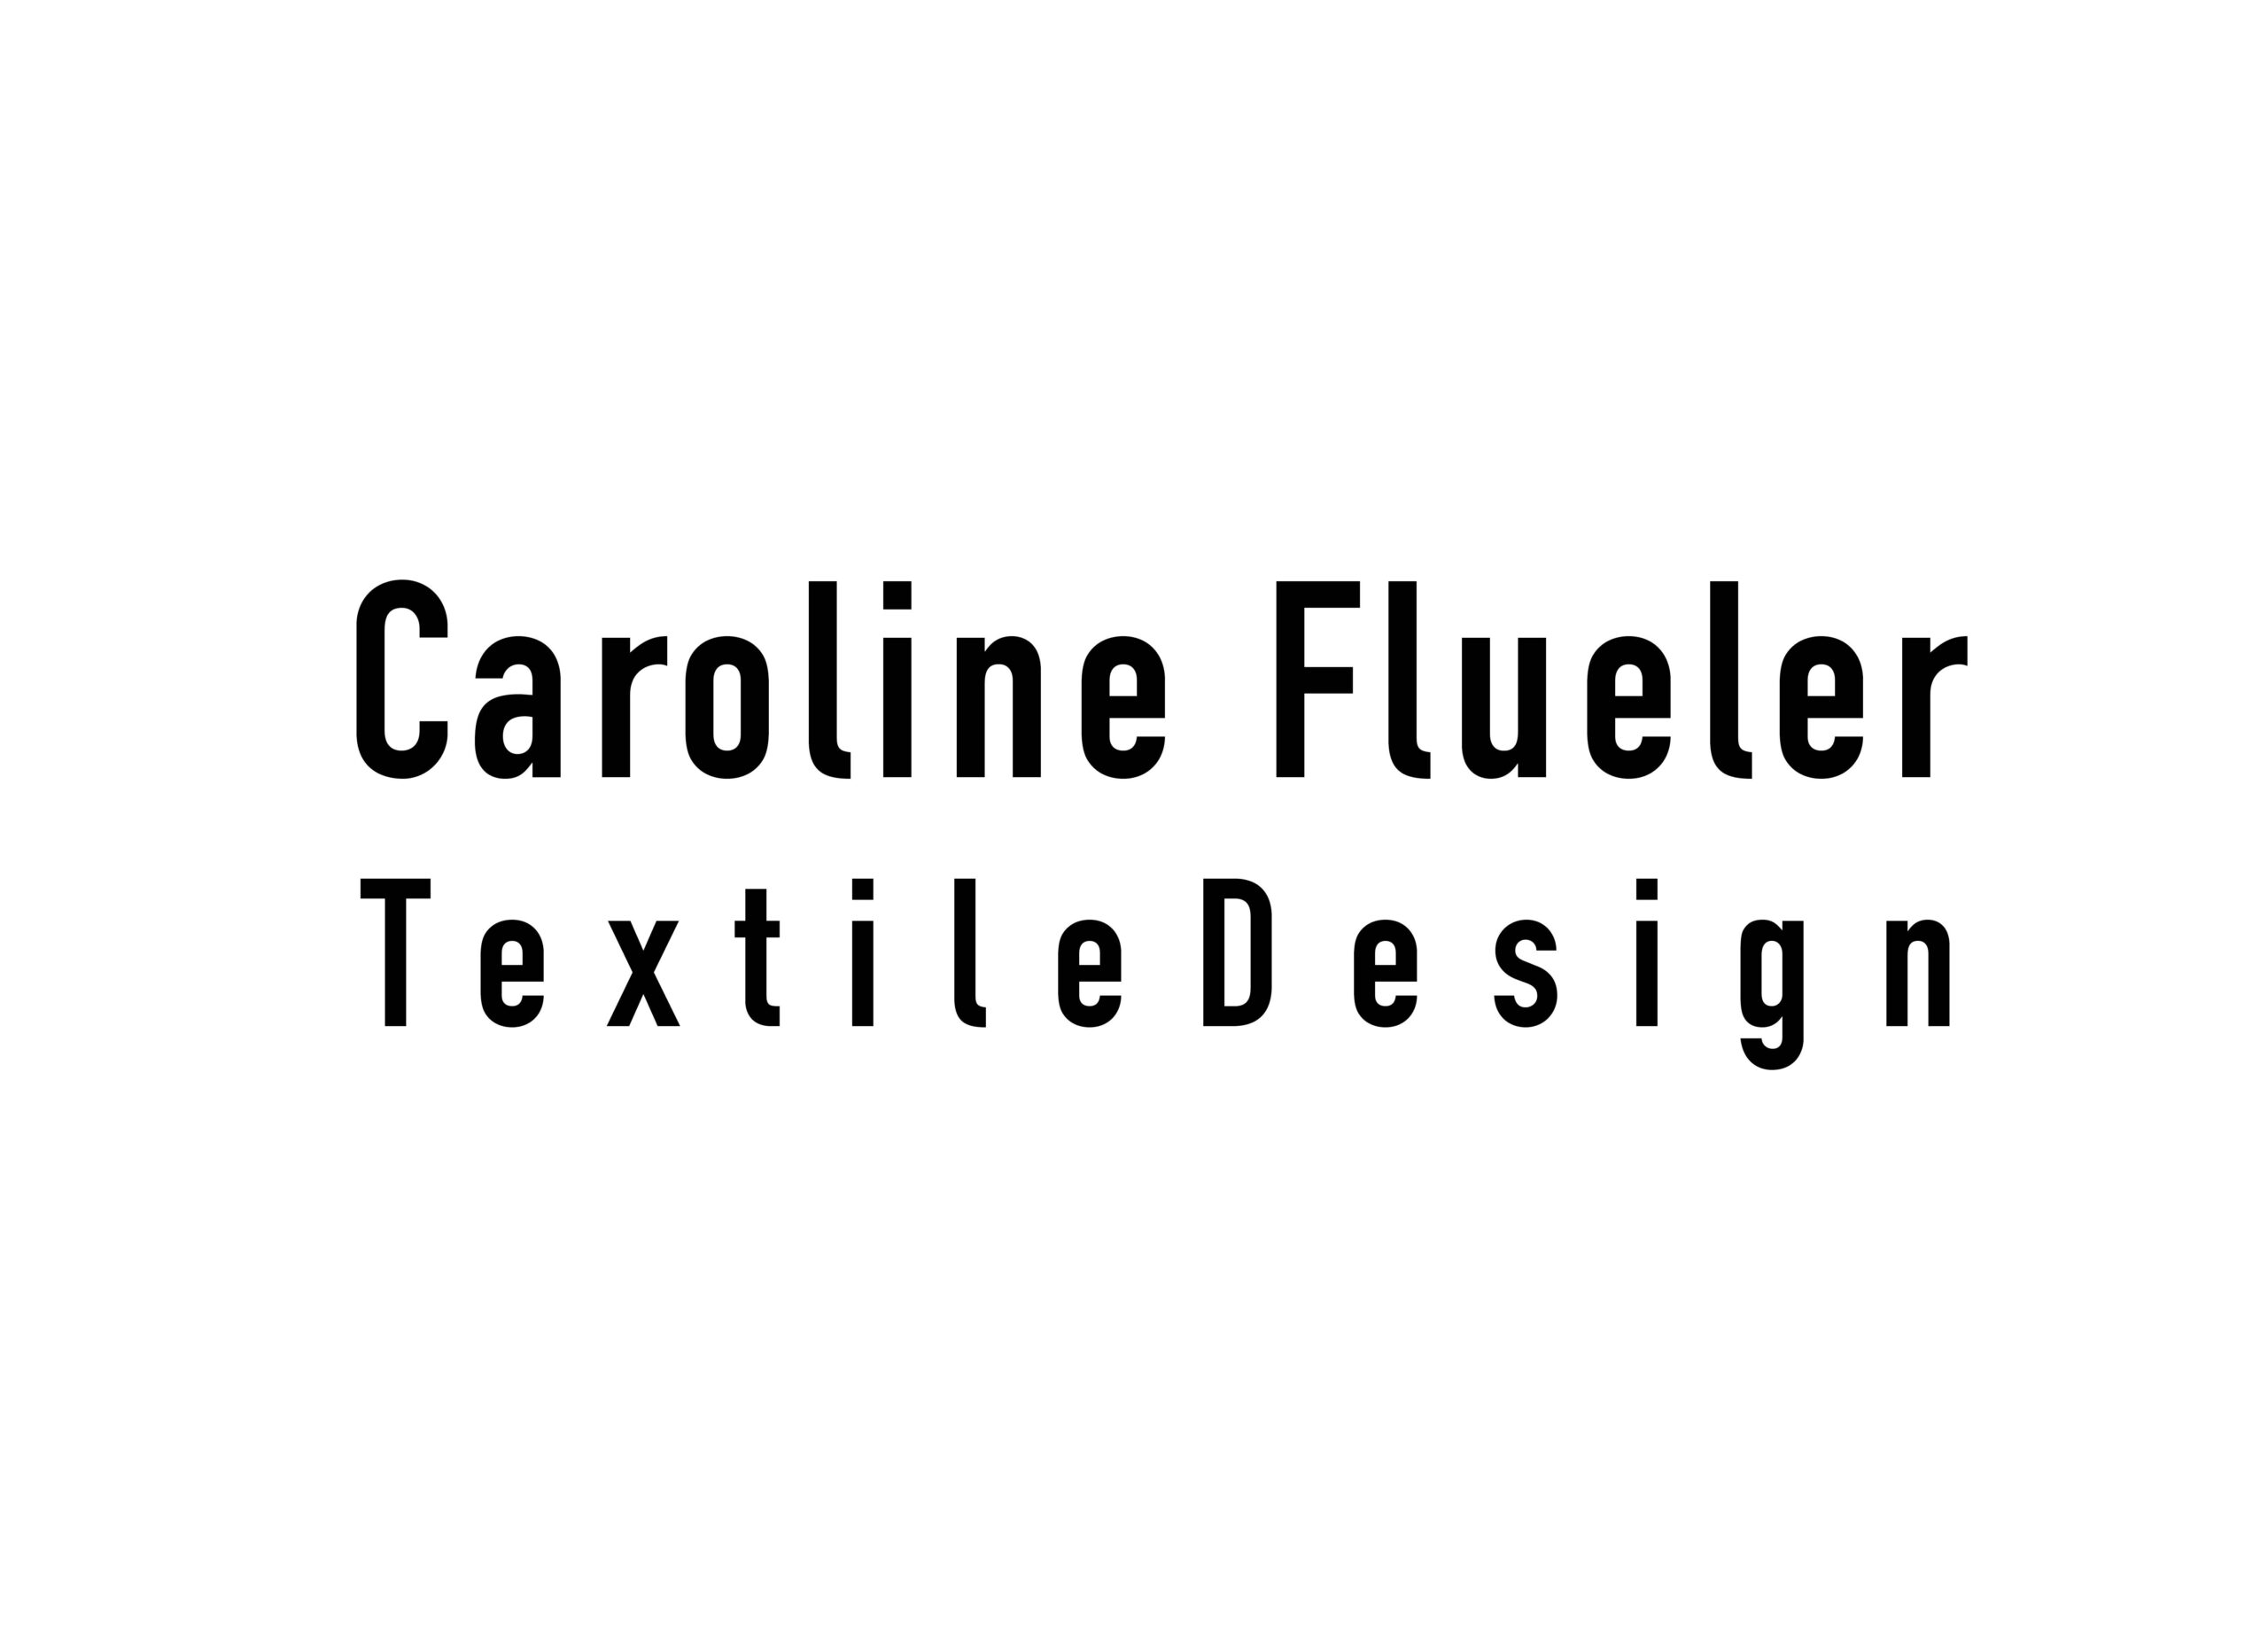 Caroline Flueler TextileDesign